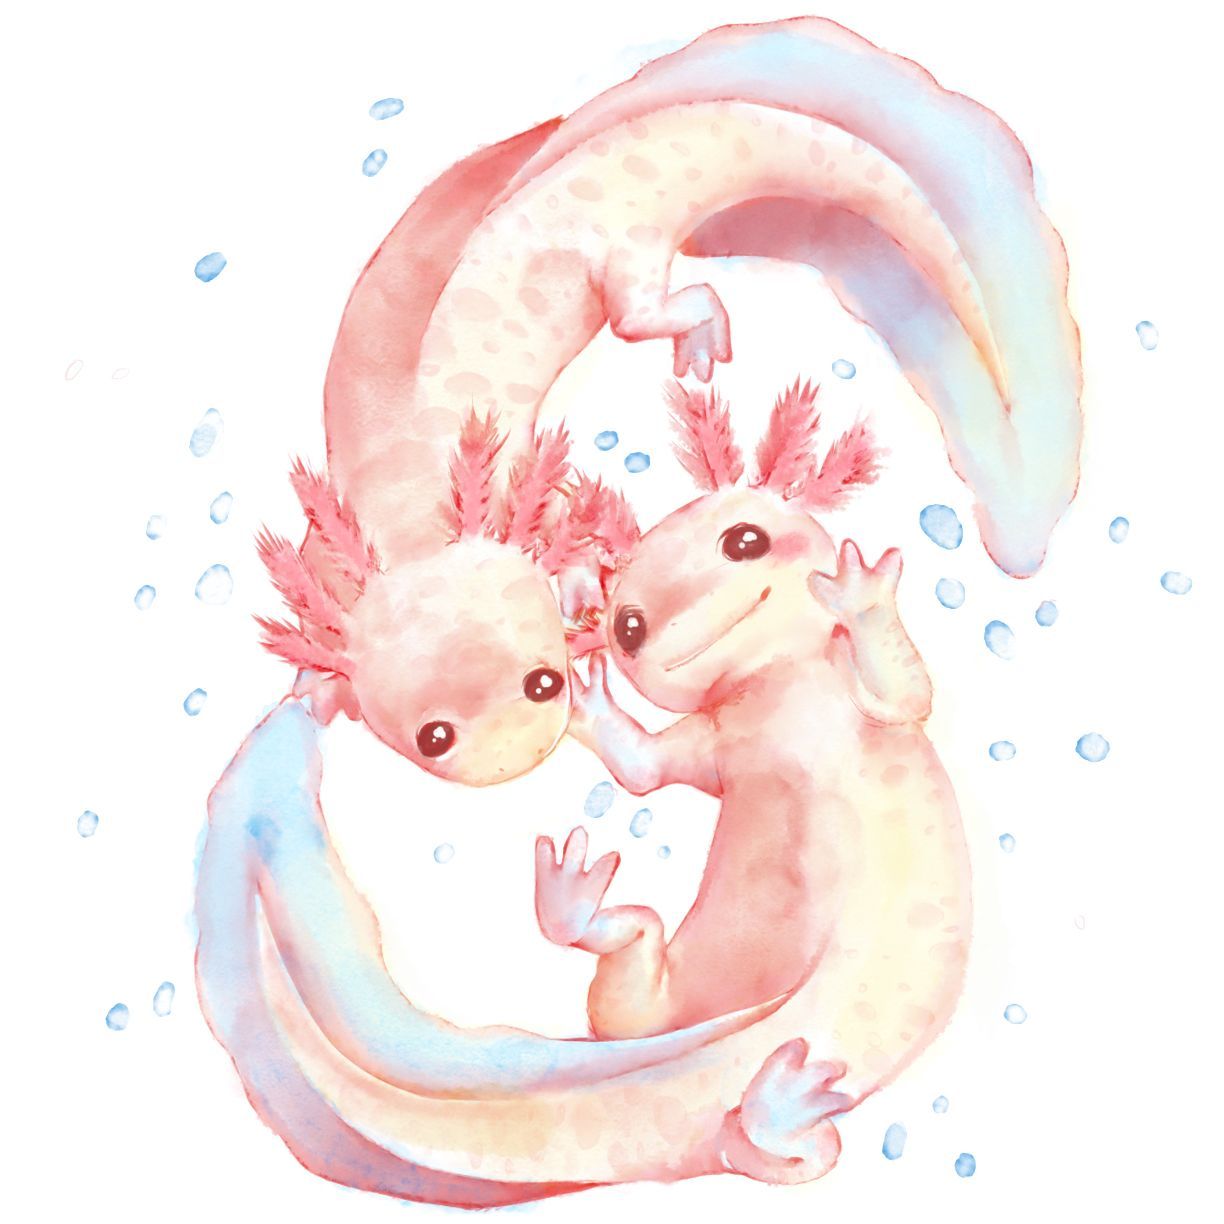 Axolotls ideas. axolotl, cute animals, reptiles and amphibians